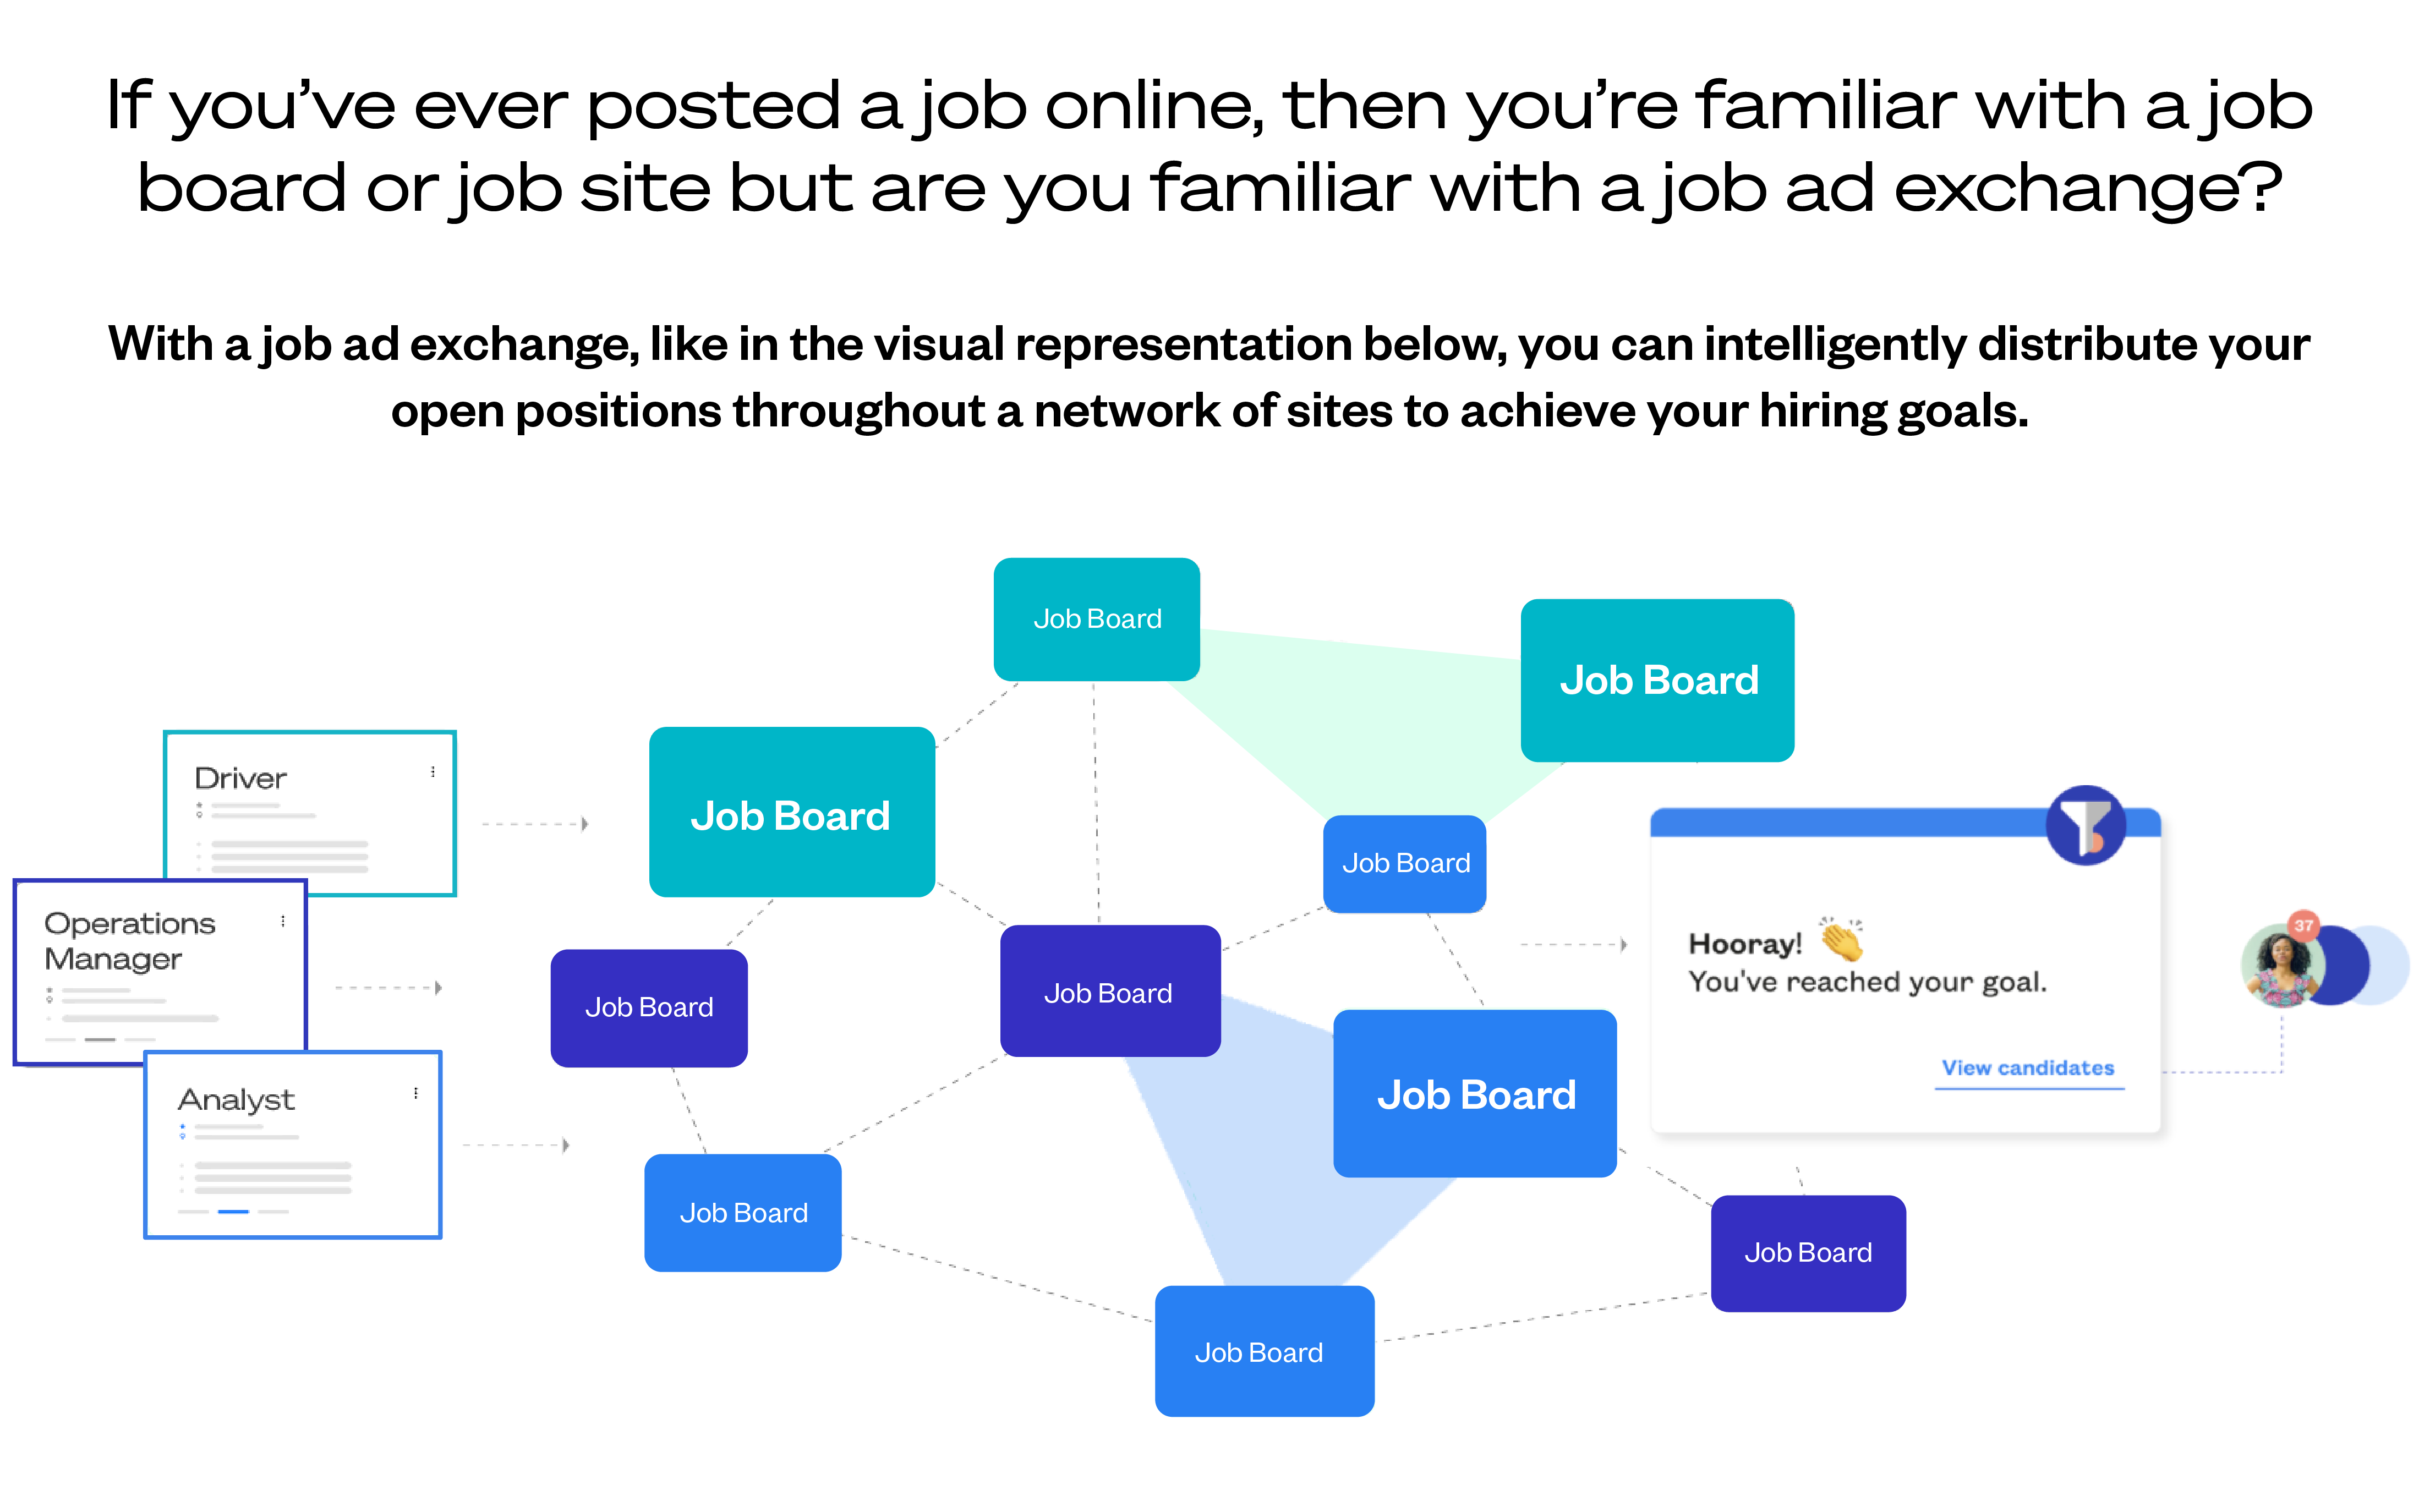 job board ad exchange comparison infographic